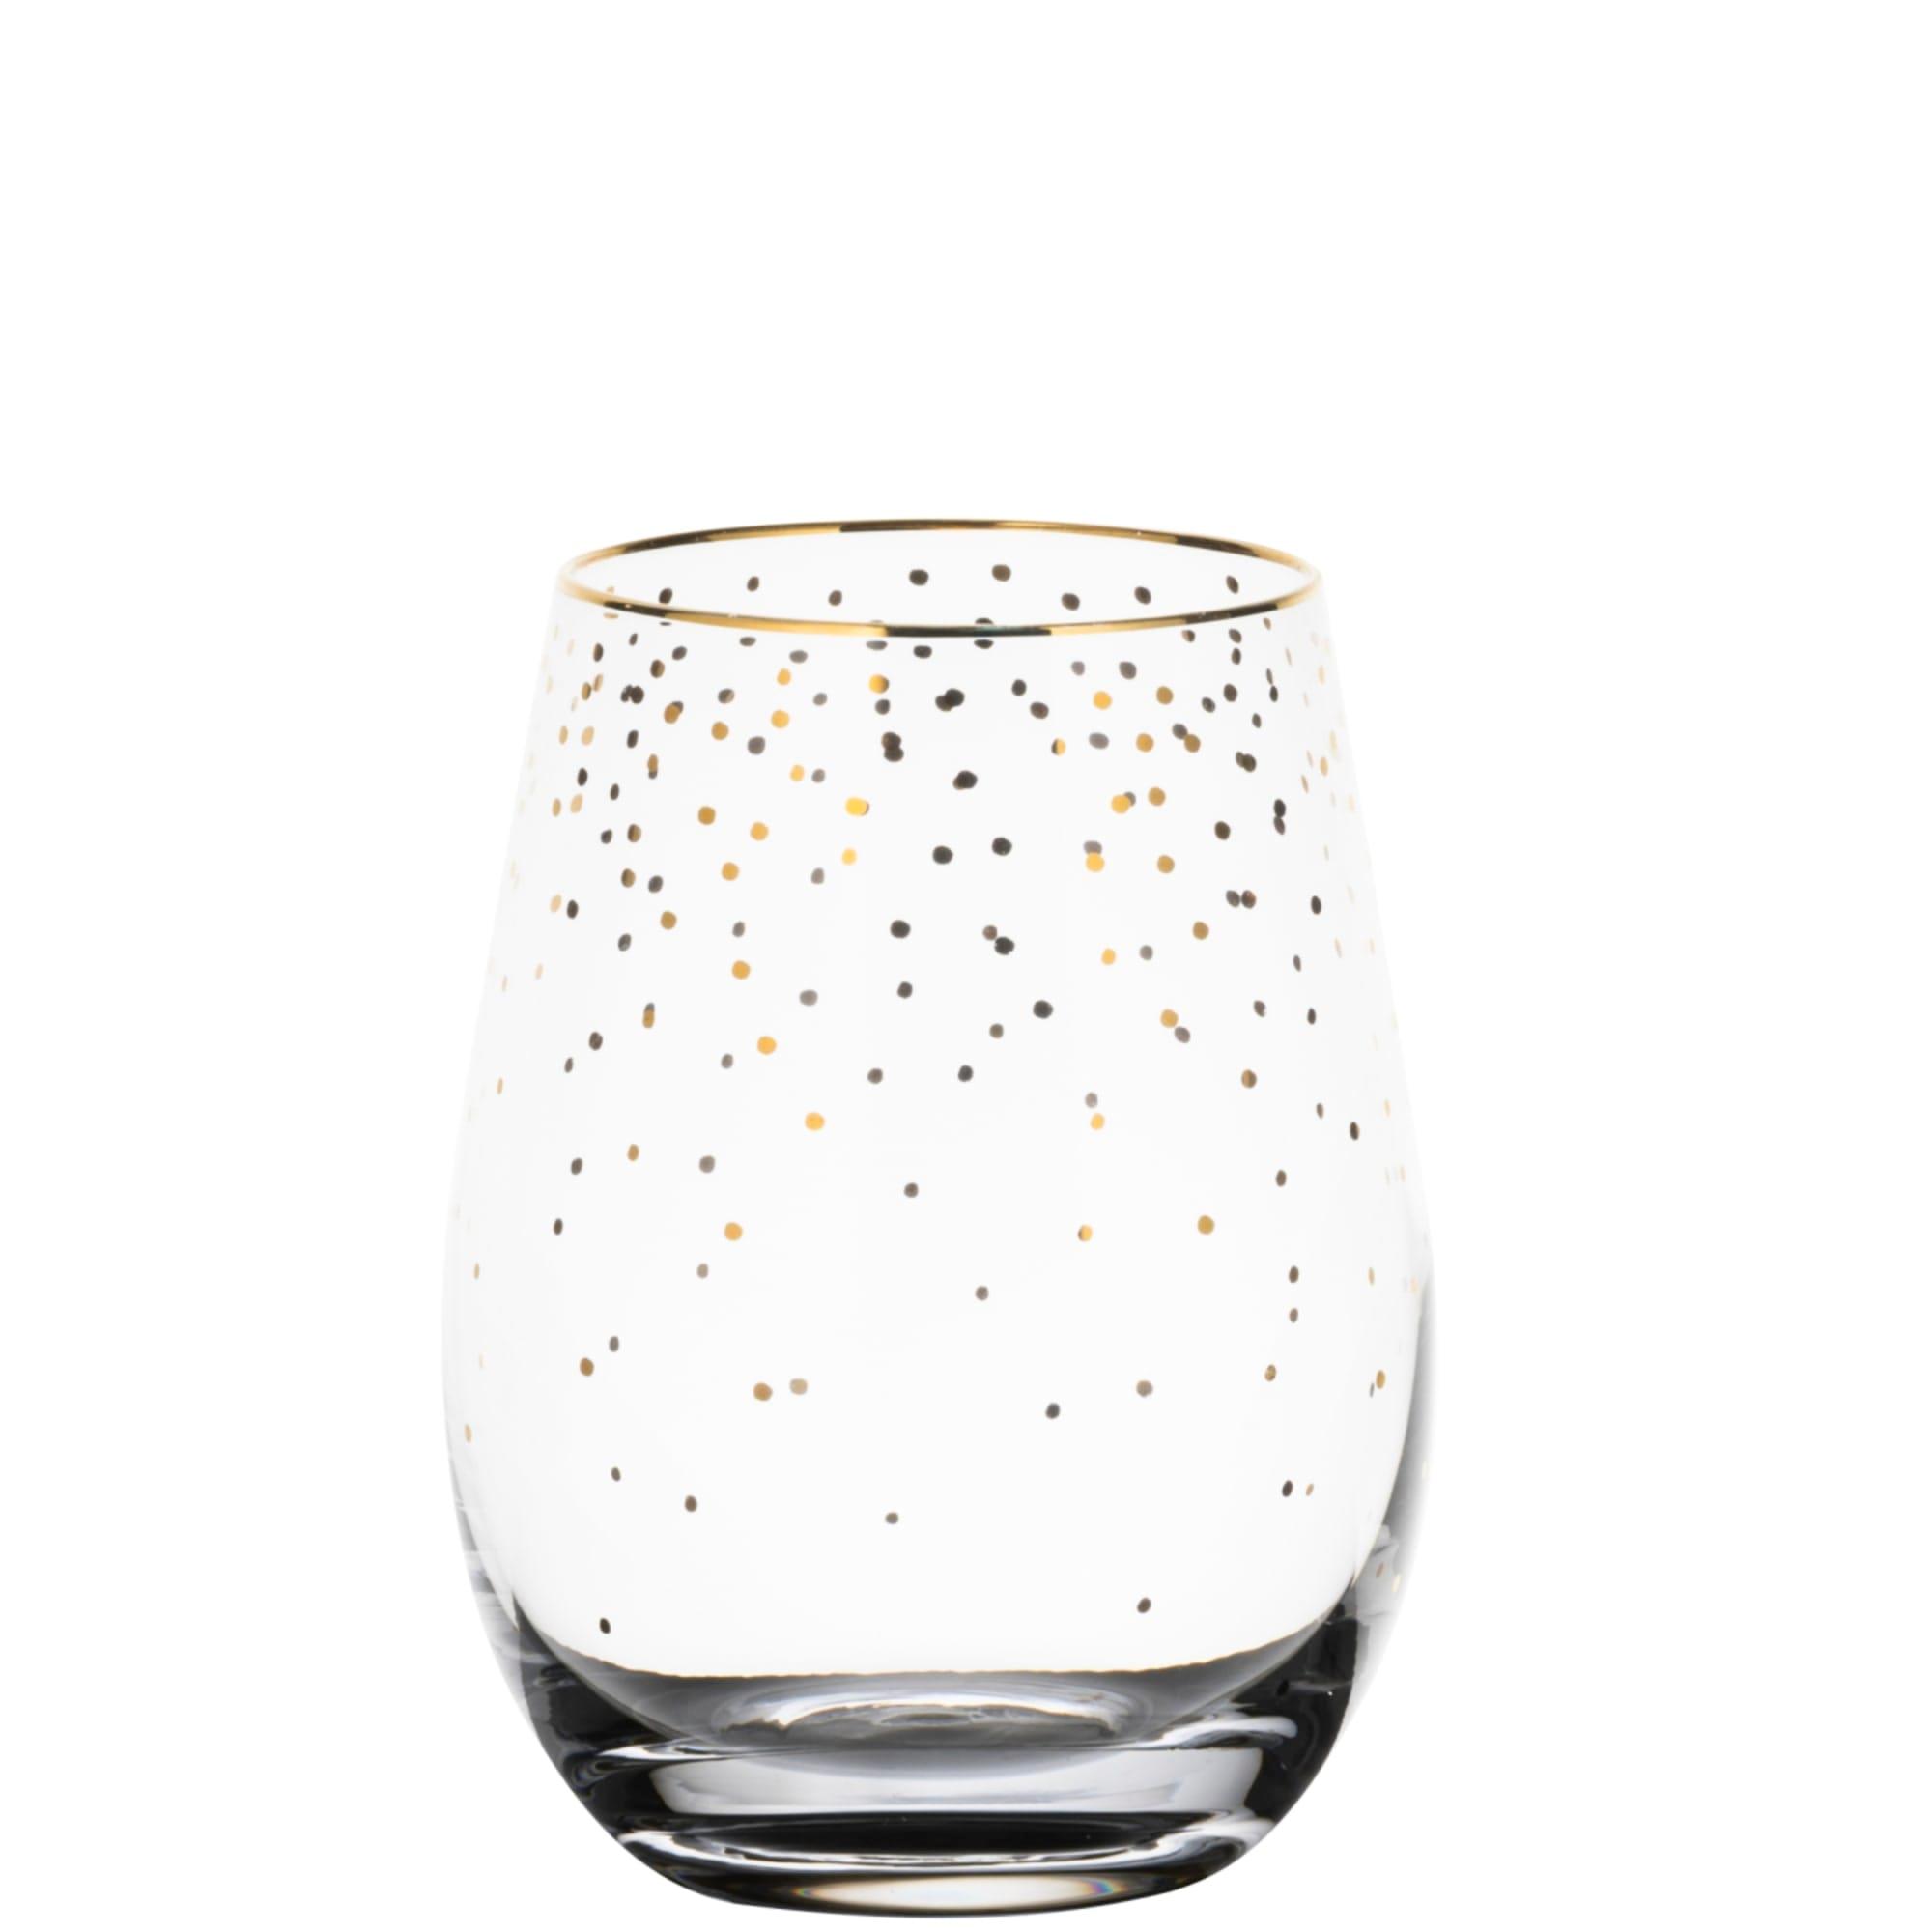 Salisbury & Co Festive Stemless Wine Glass 450ml Set of 2 Gold Image 6